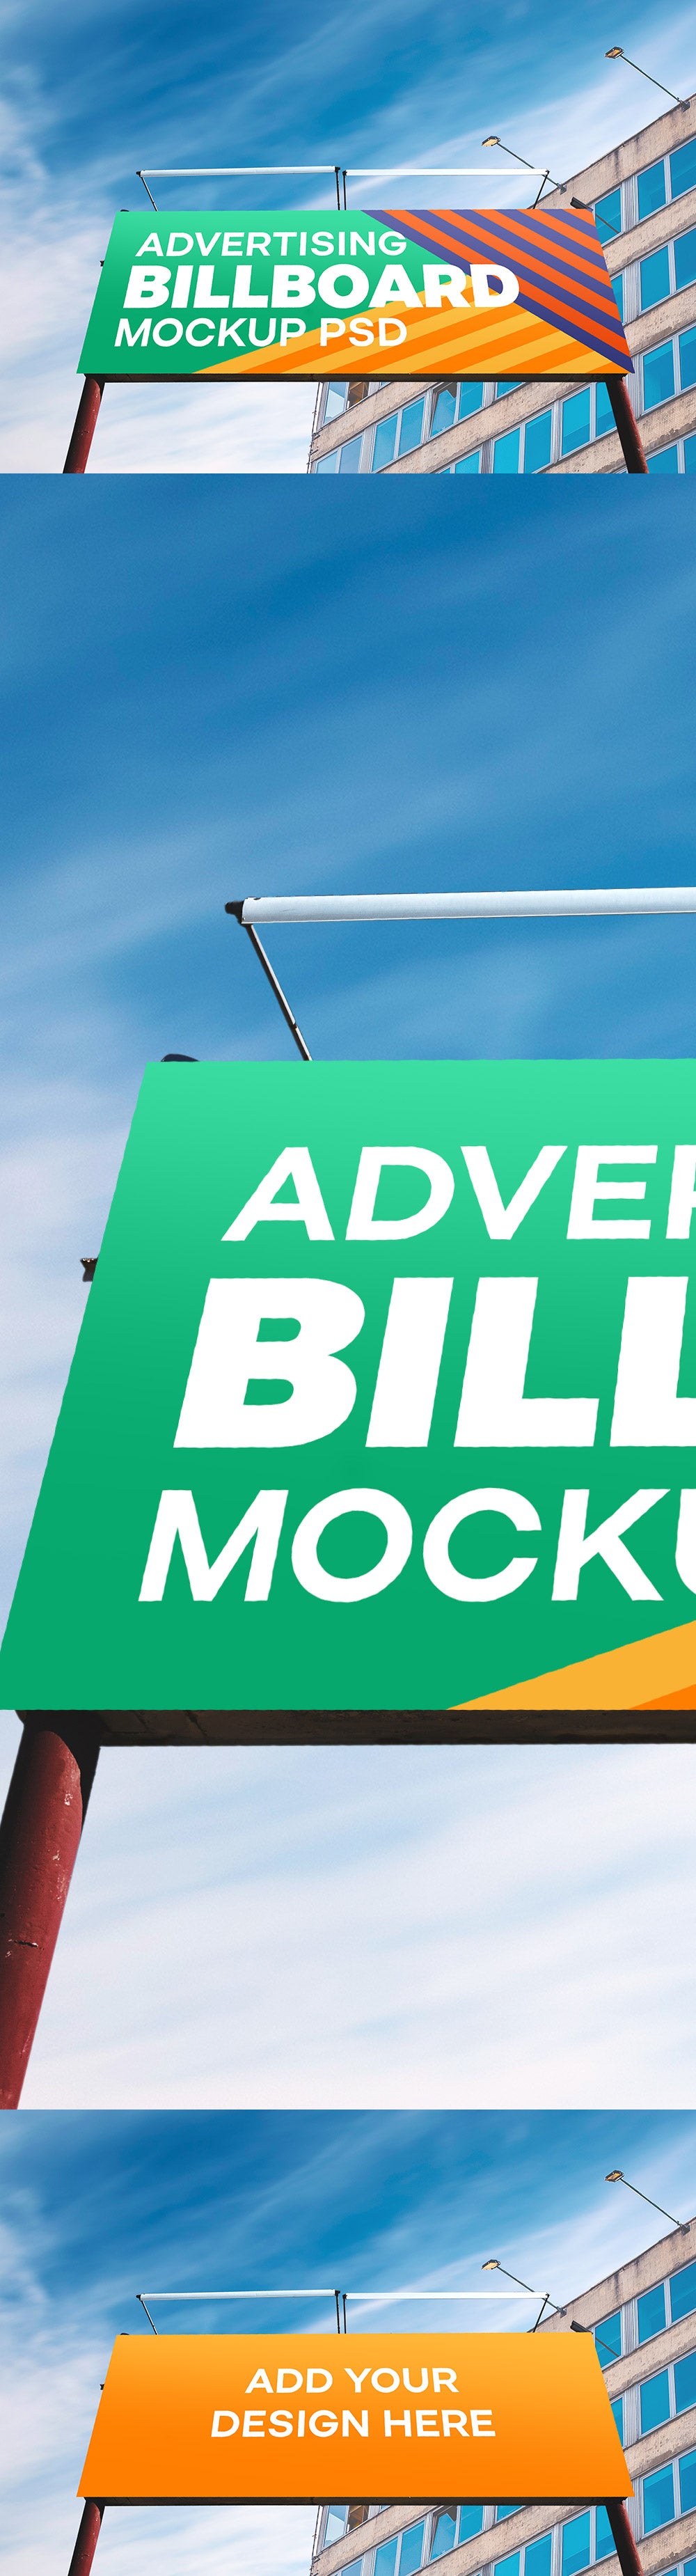 Free Outdoor Advertising Billboard PSD Mockup